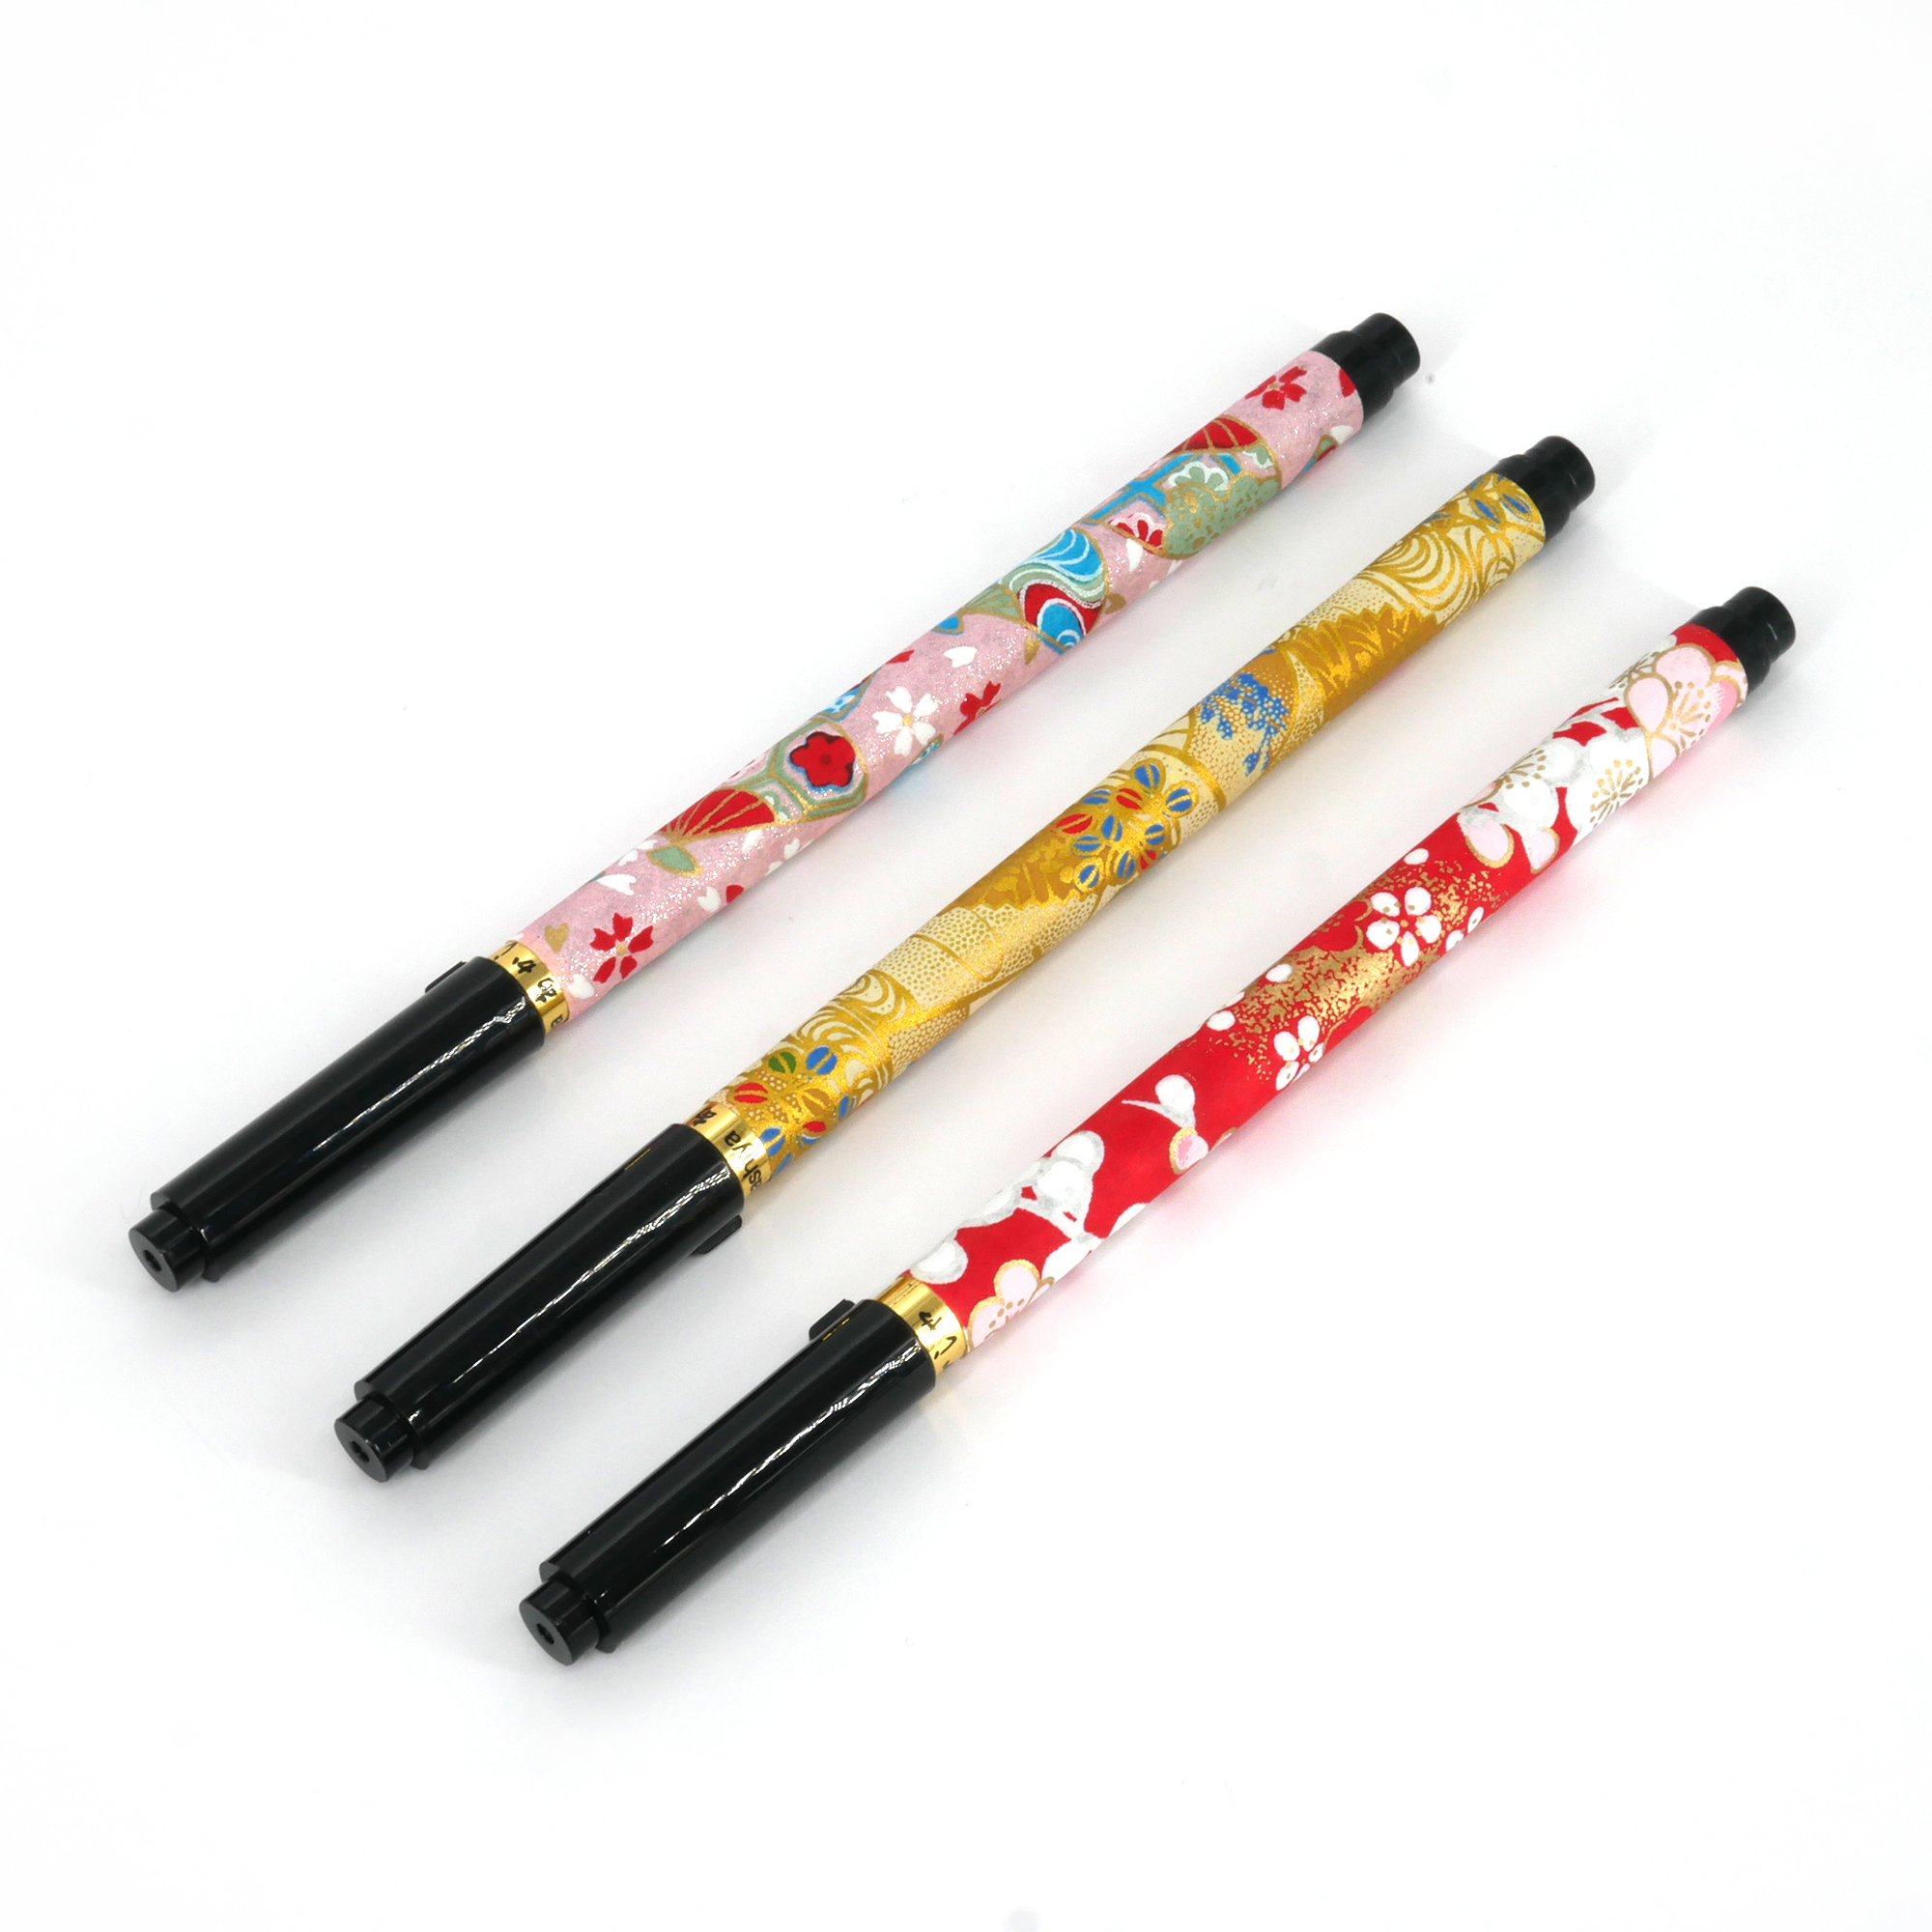 Handmade pen with brush tip, EDO